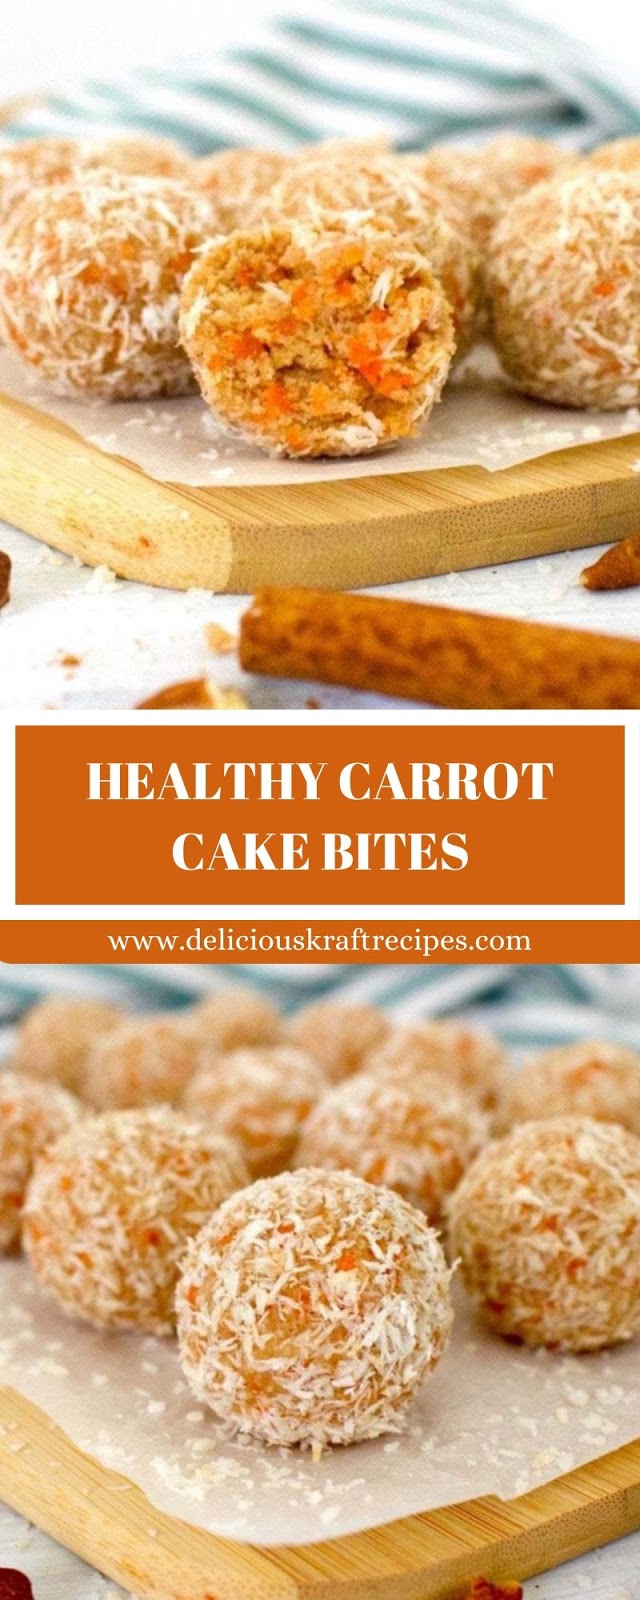 HEALTHY CARROT CAKE BITES